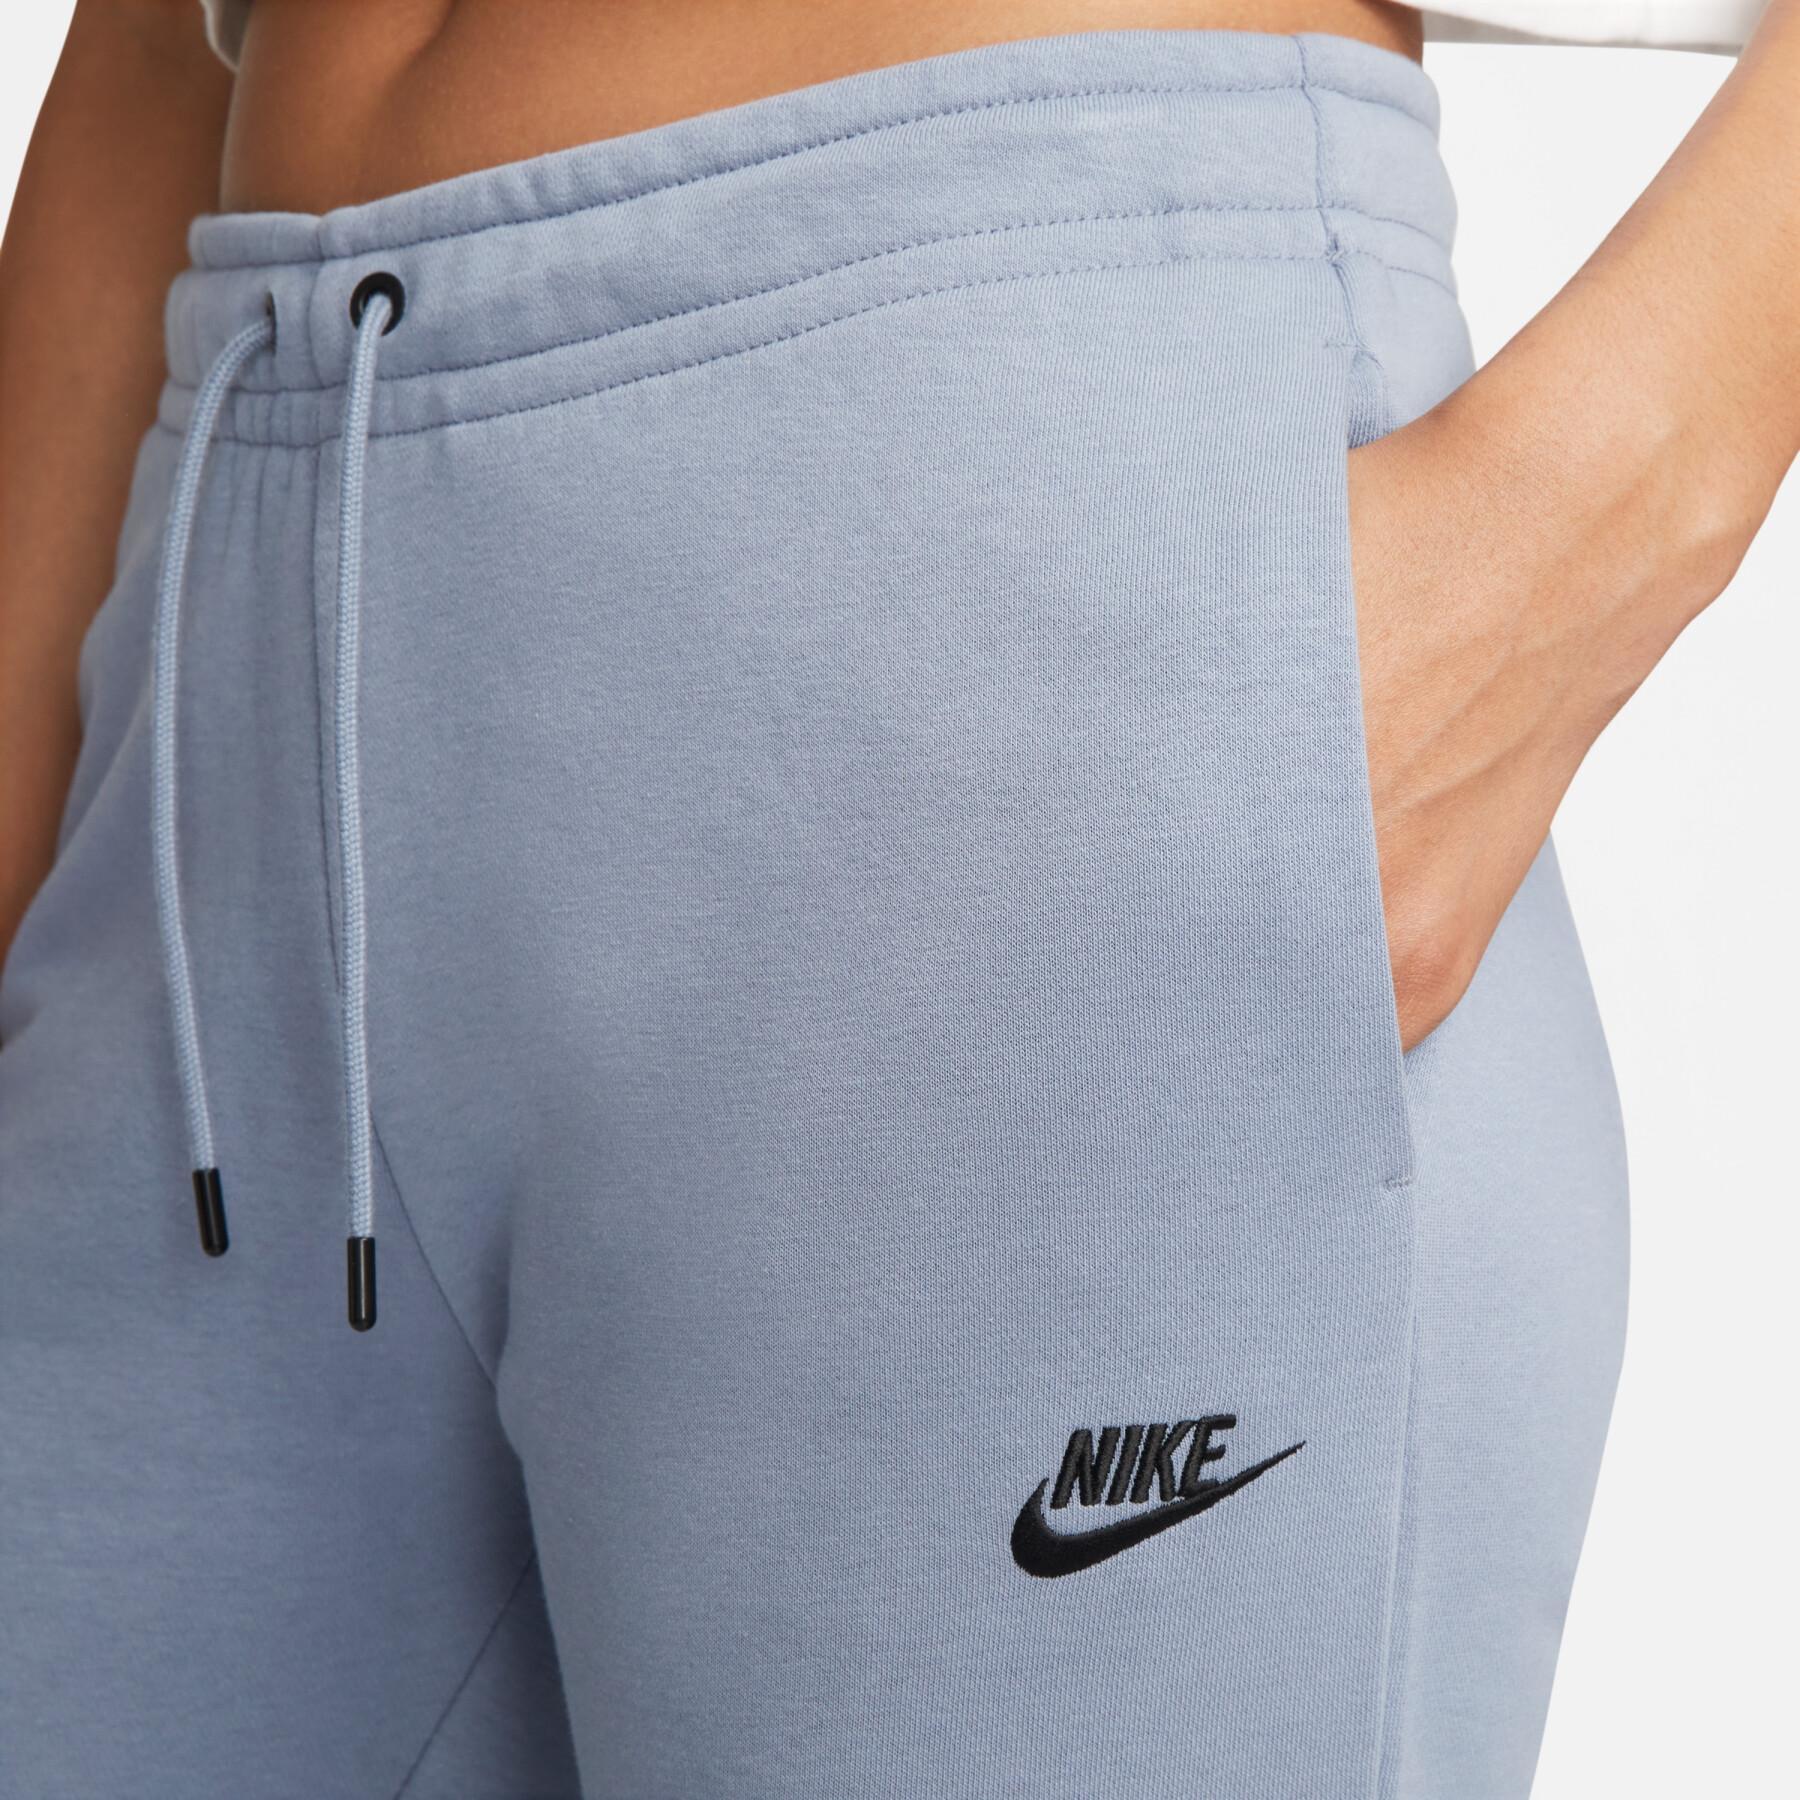 Jogginganzug aus Fleece, Damen Nike Sportswear Essential